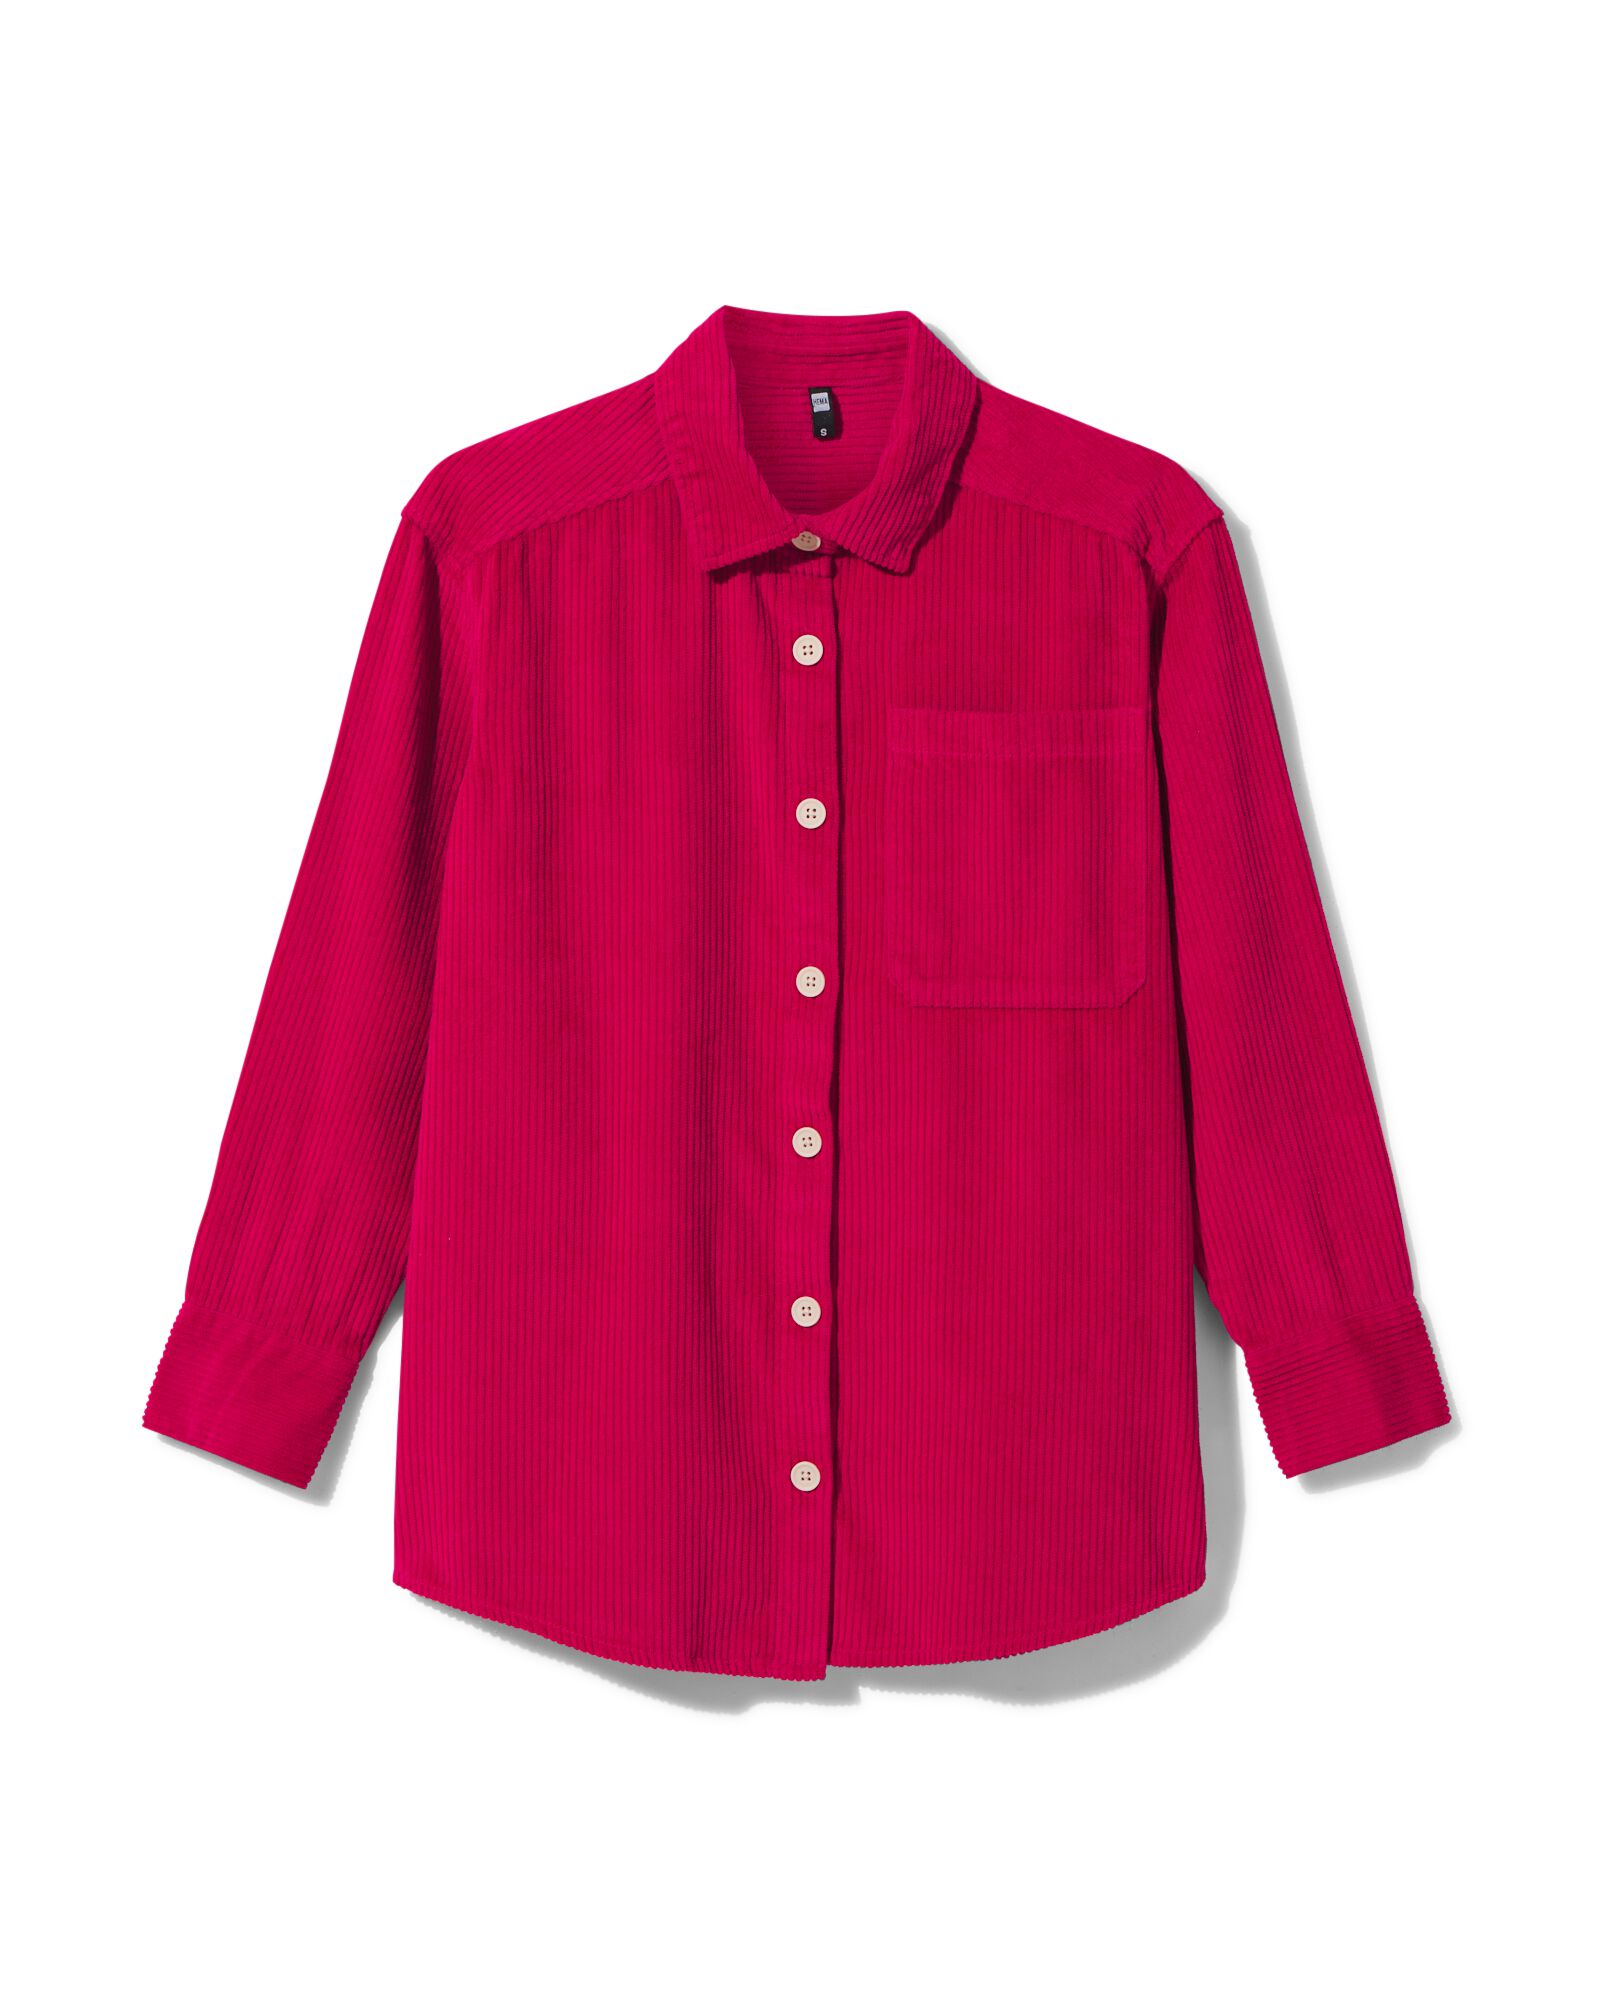 dames blouse rib corduroy Poppy rood rood - 36238540RED - HEMA